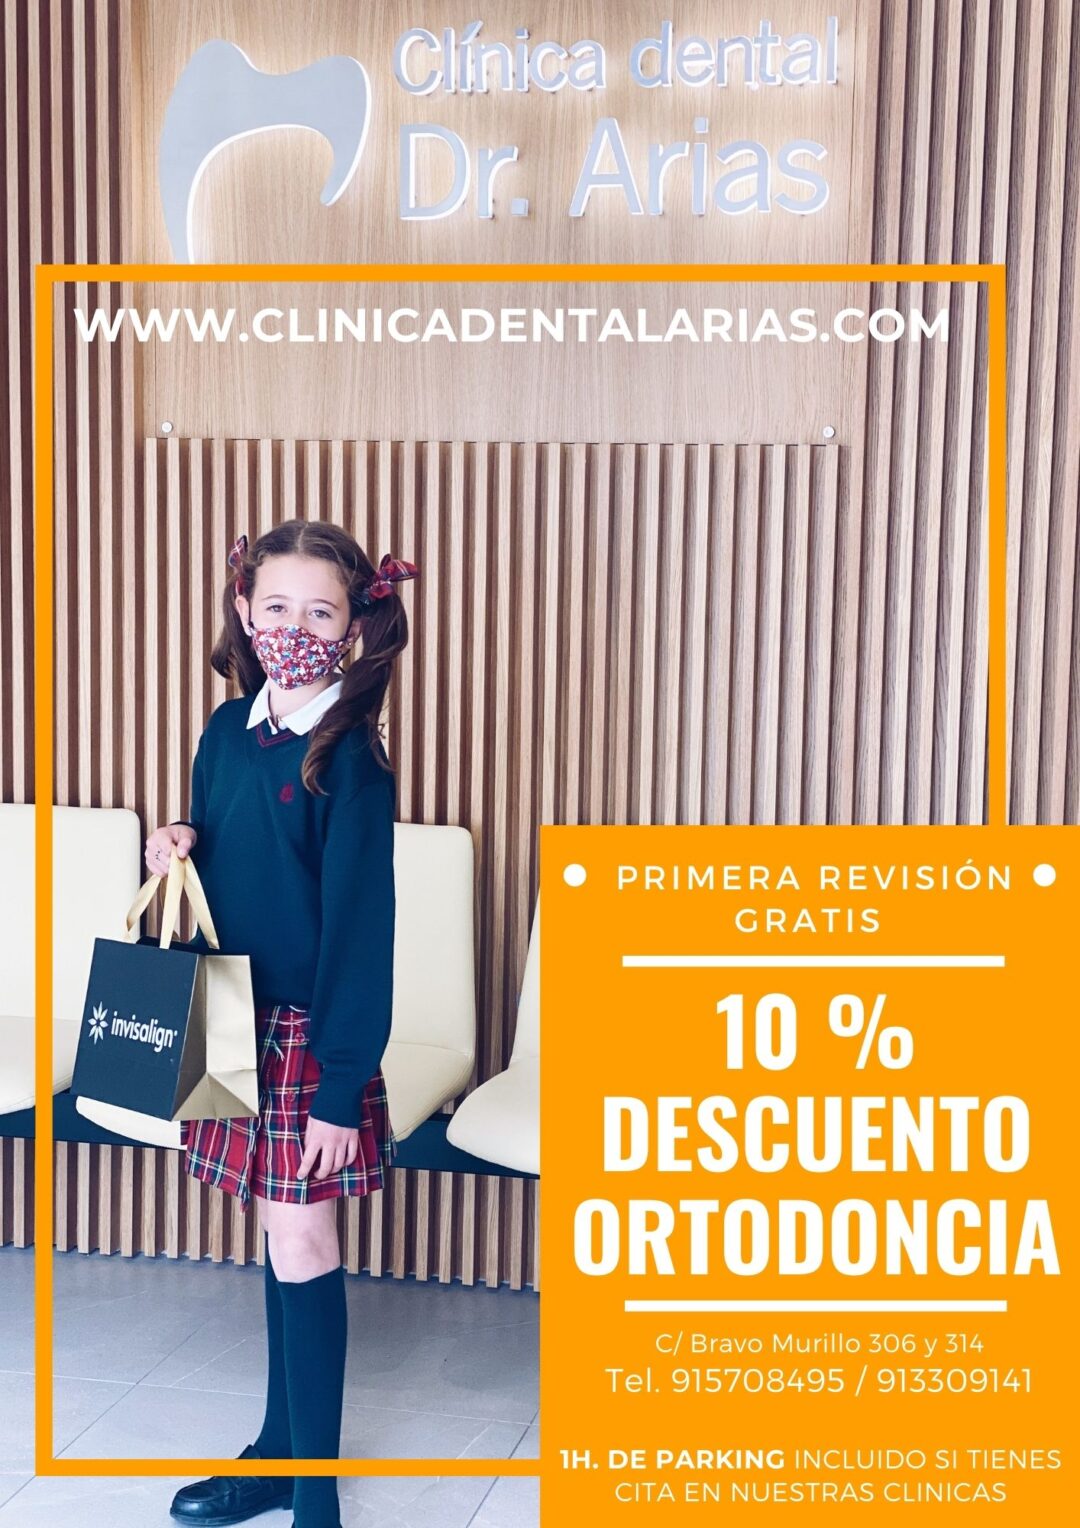 Clínica dental Dr. Arias